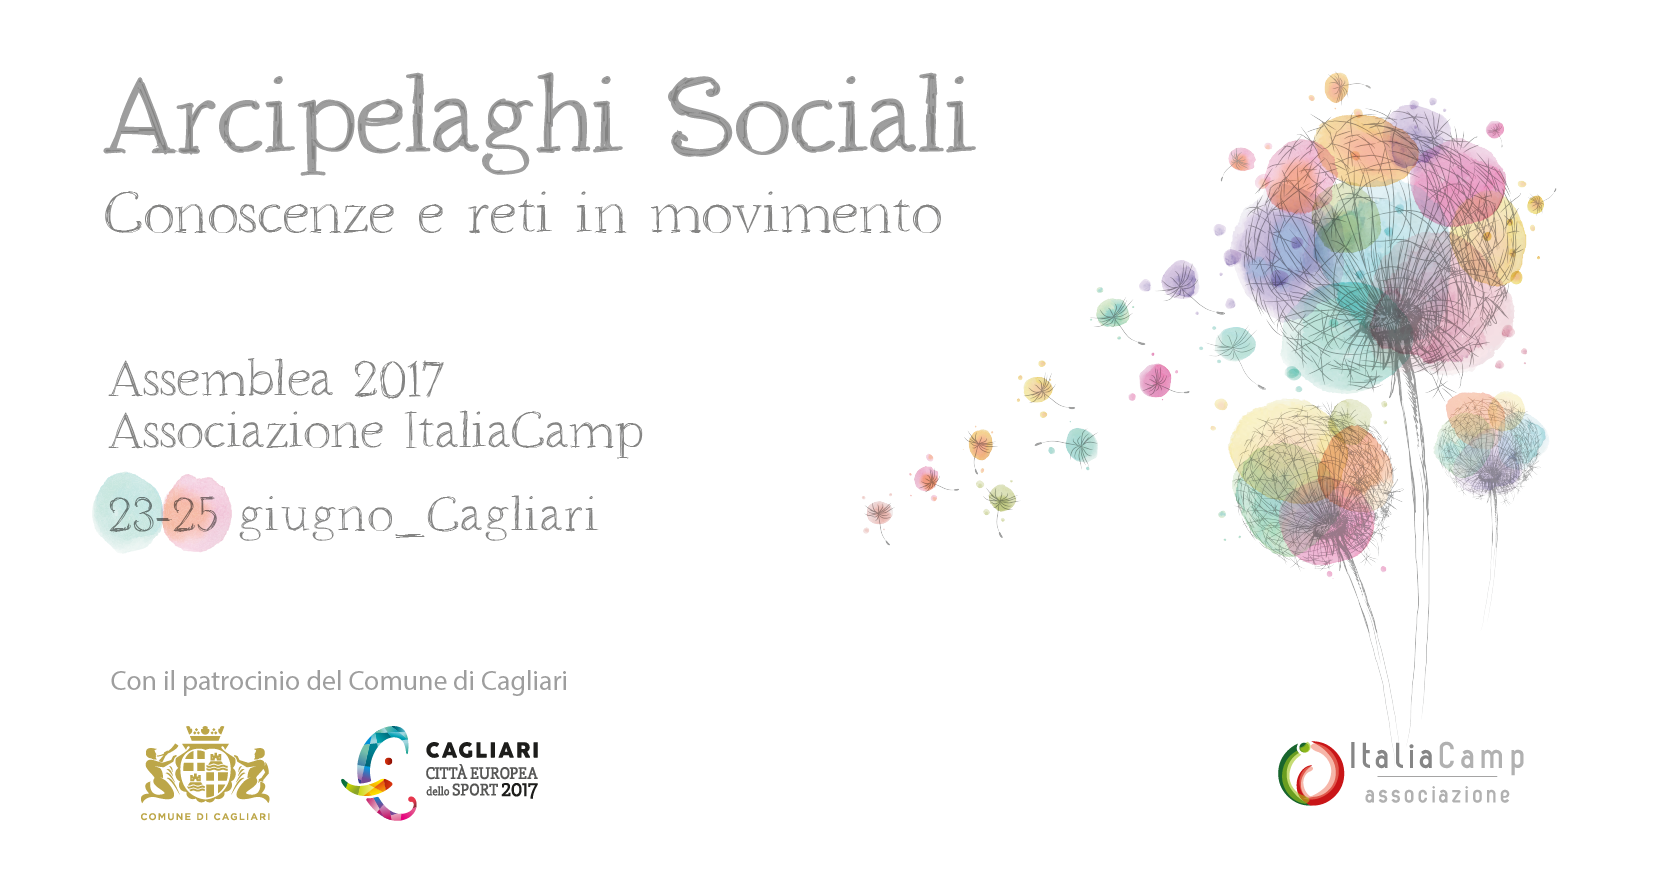 Assemblea ItaliaCamp Arcipelaghi Sociali